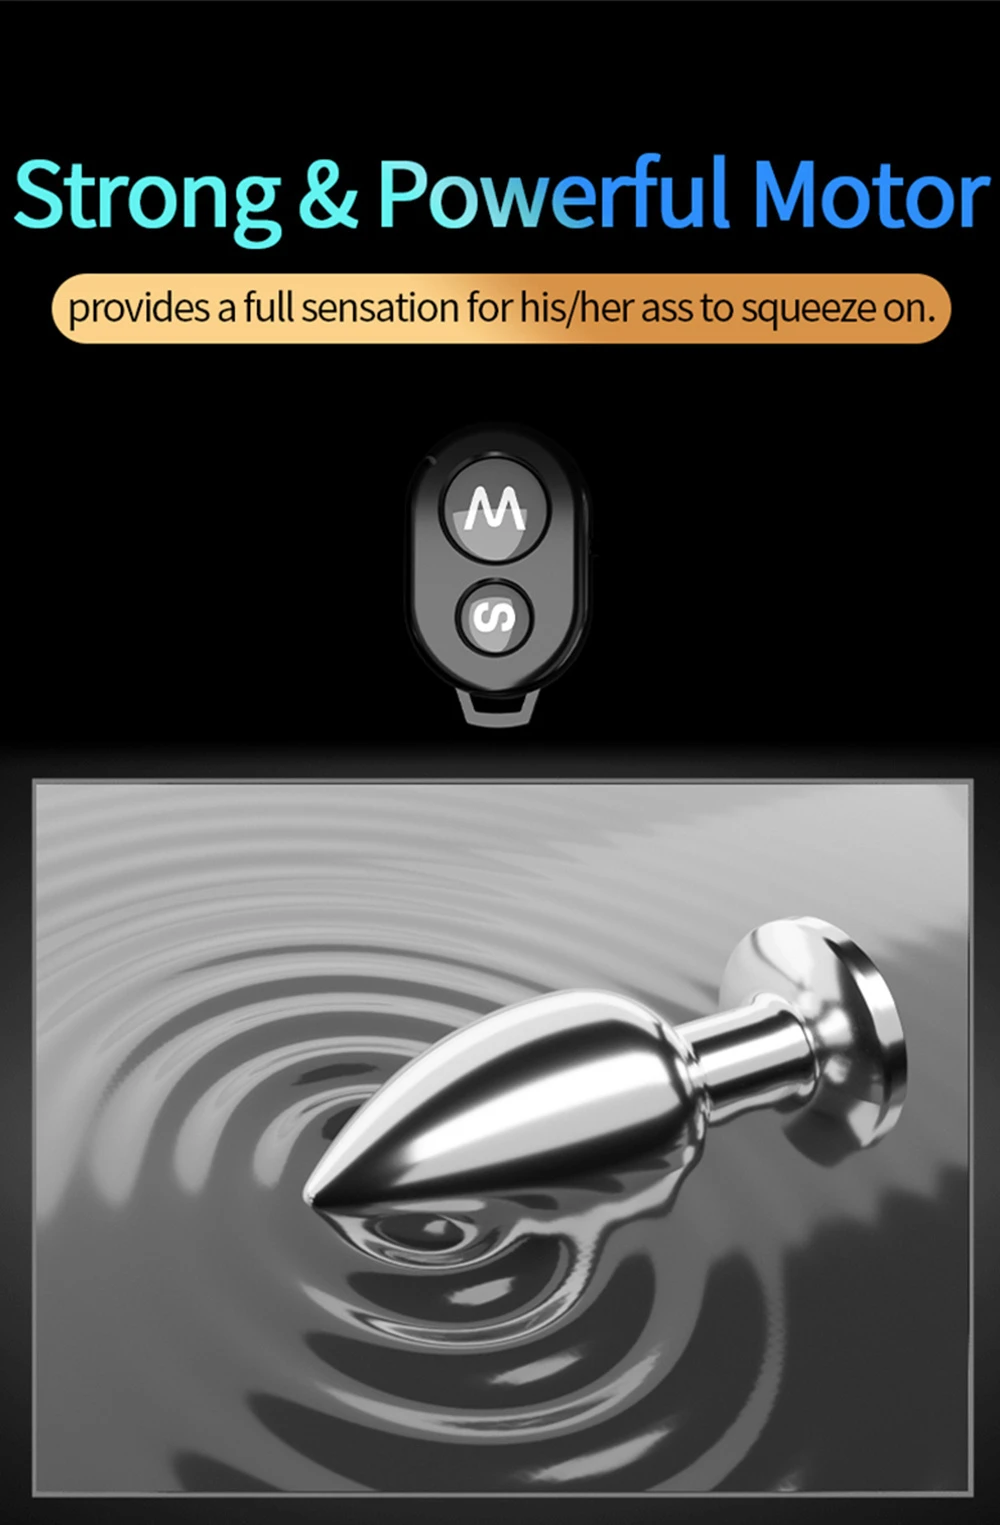 Small Order Vibrating Butt Plugs Dildo Wireless Remote Control Anal Plug G-spot Stimulator Prostate Massager Sexshop Products G64W Se71d3eeec7344898bce56feea13e4b1cp